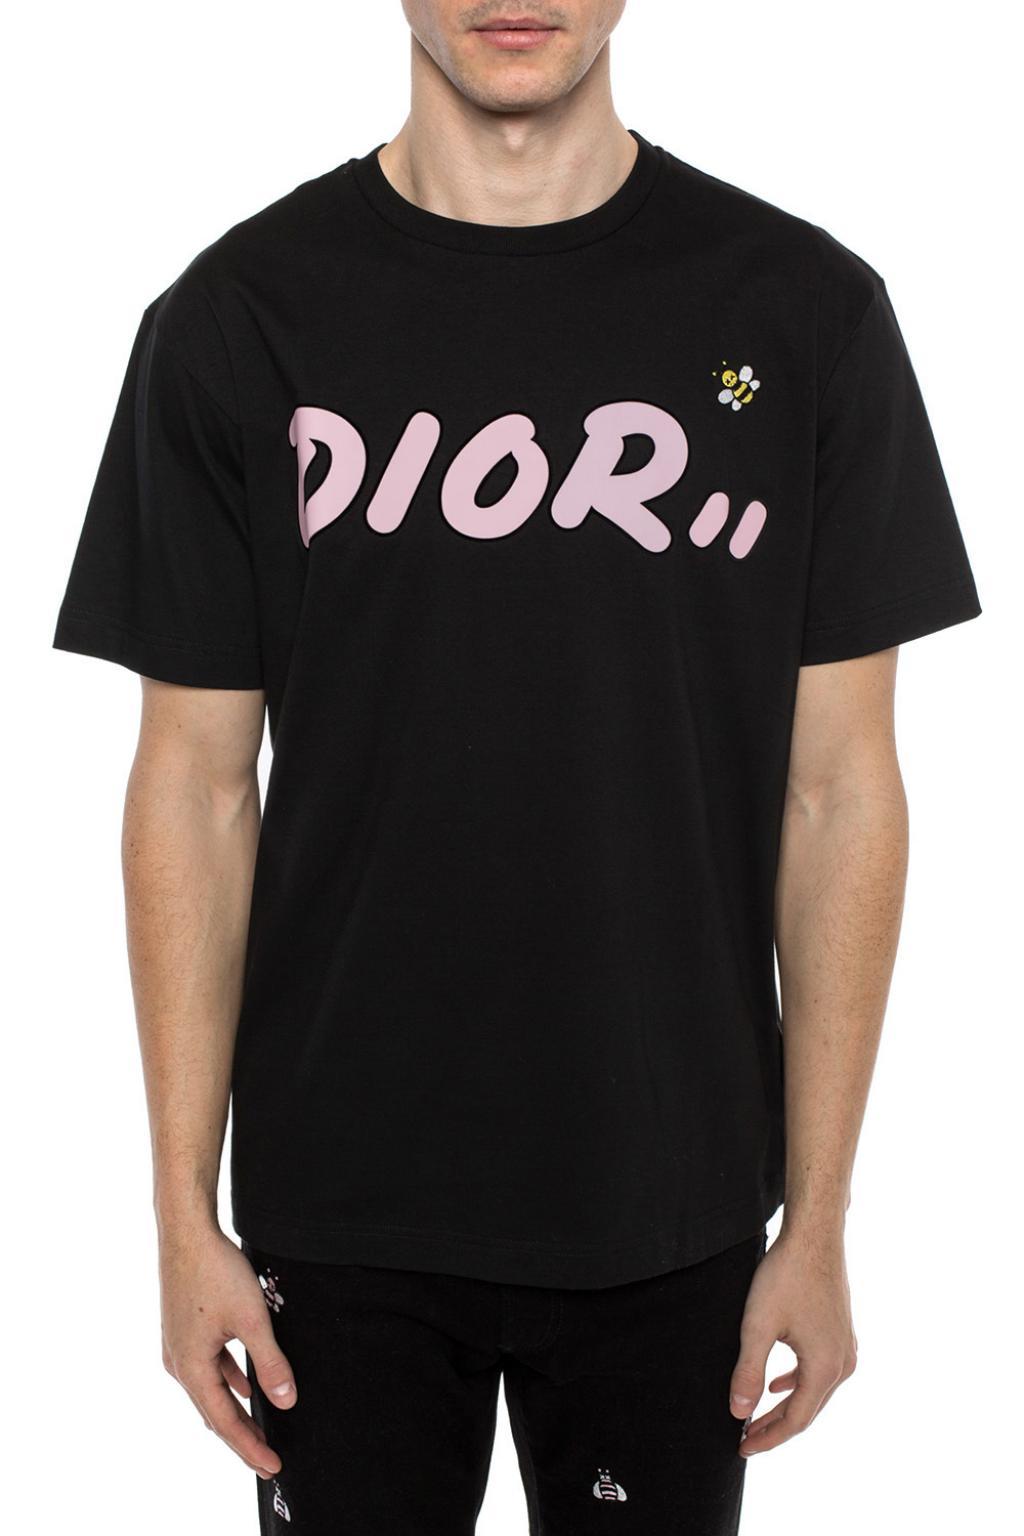 KAWS x Dior Logo TShirt Navy  Novelship